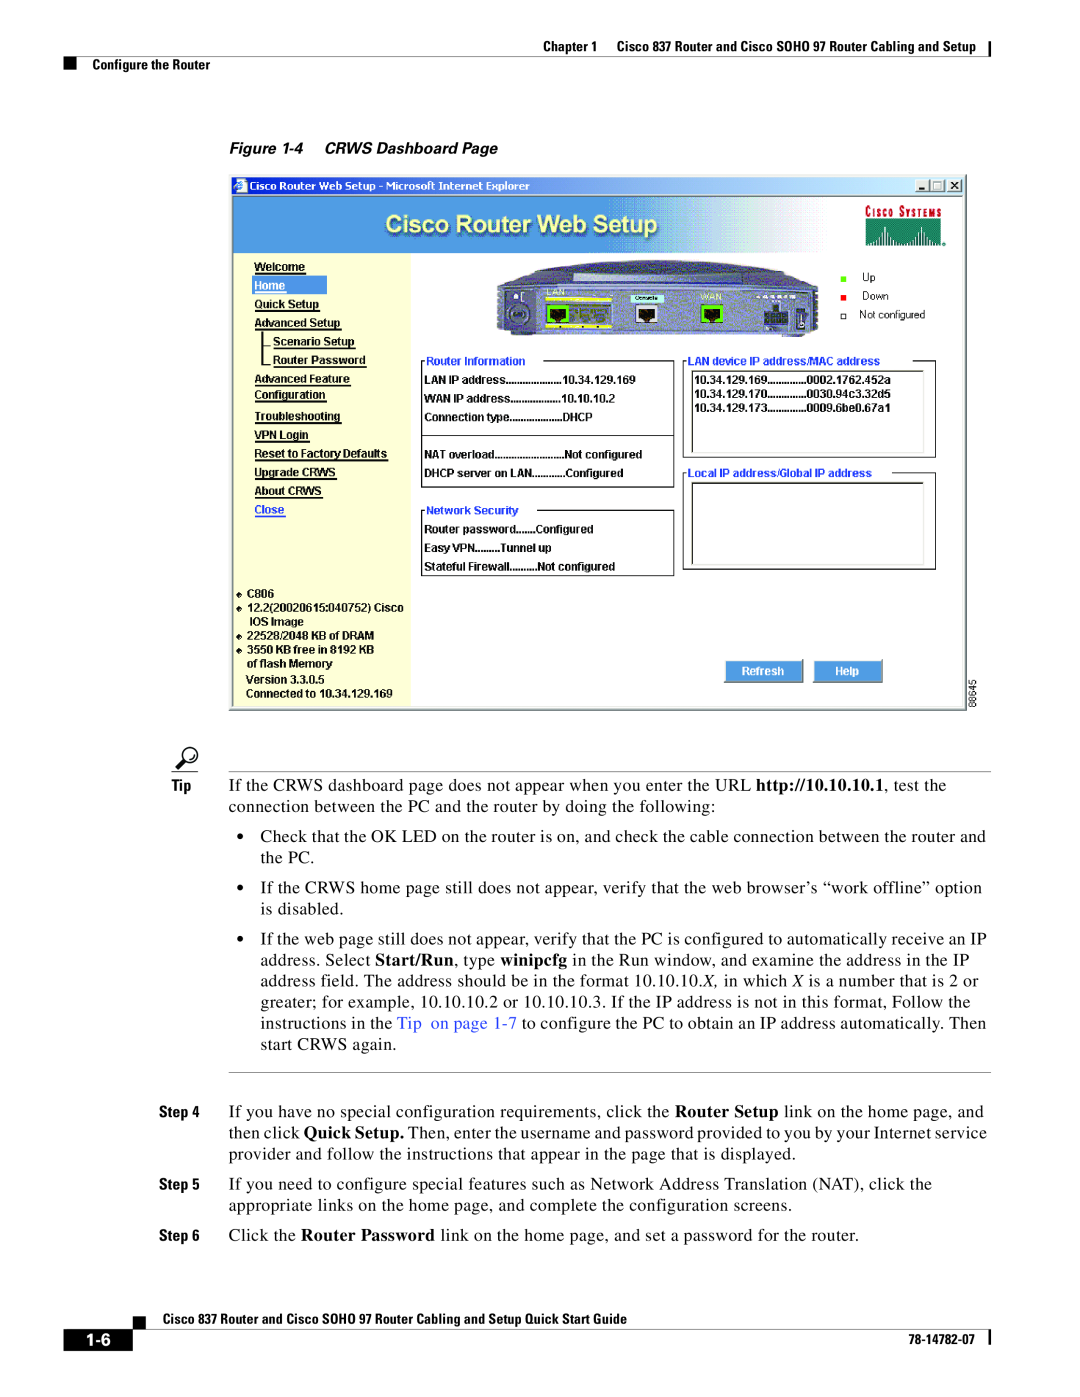 Cisco Systems SOHO 97 quick start 4 CRWS Dashboard Page 